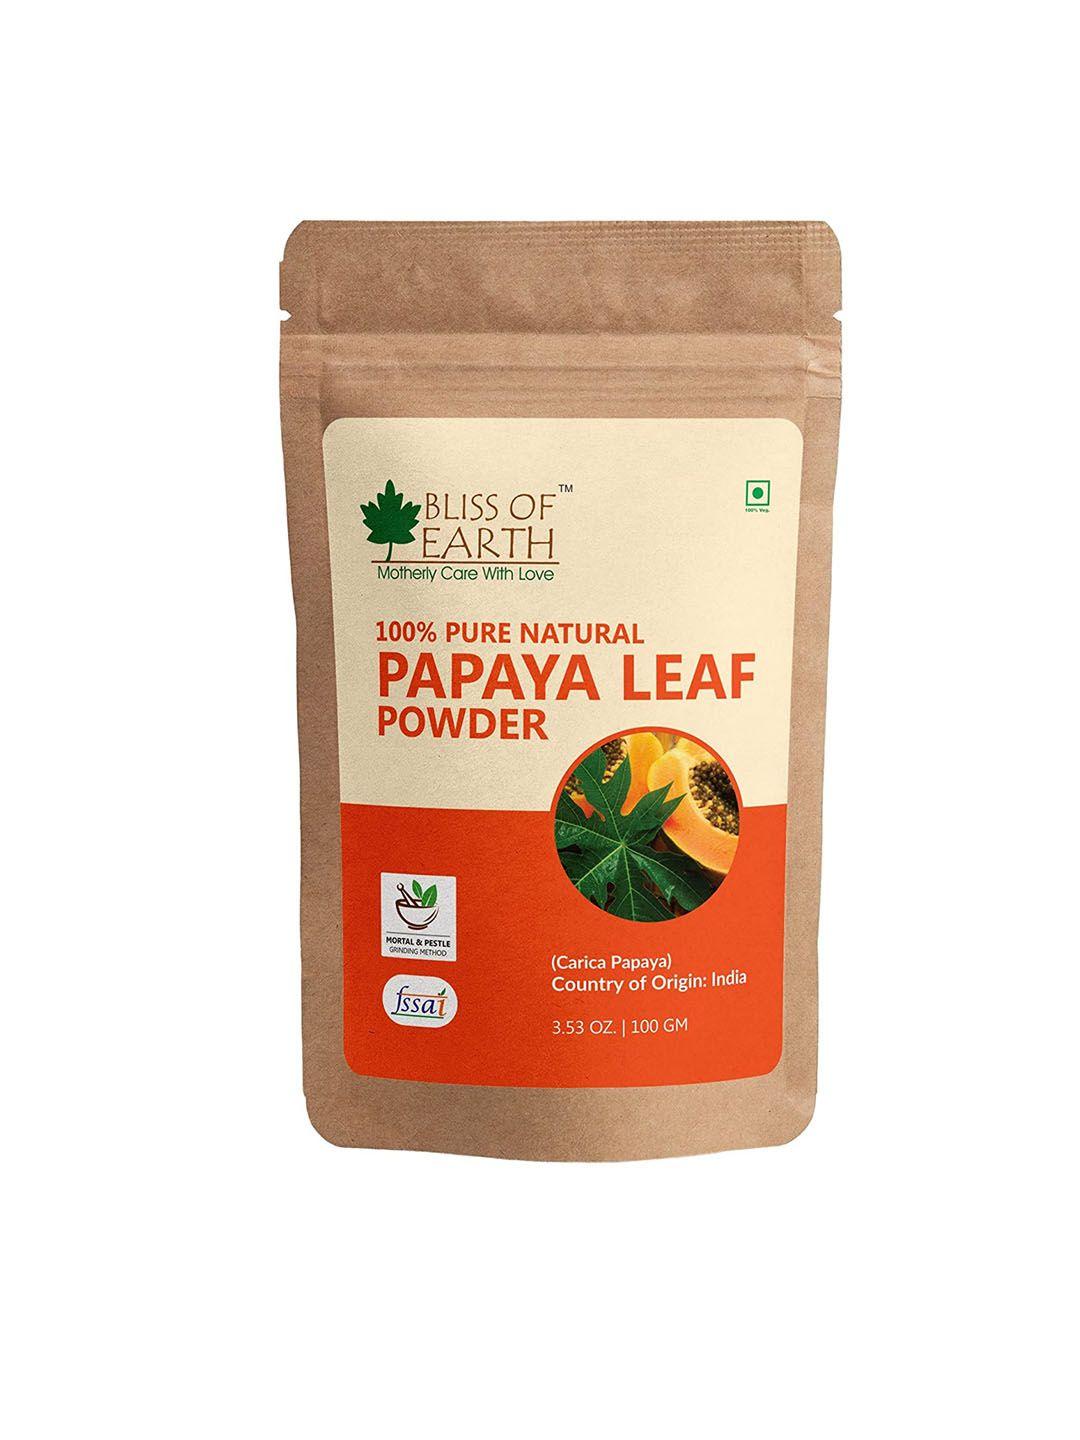 bliss of earth 100% pure papaya powder 100gm